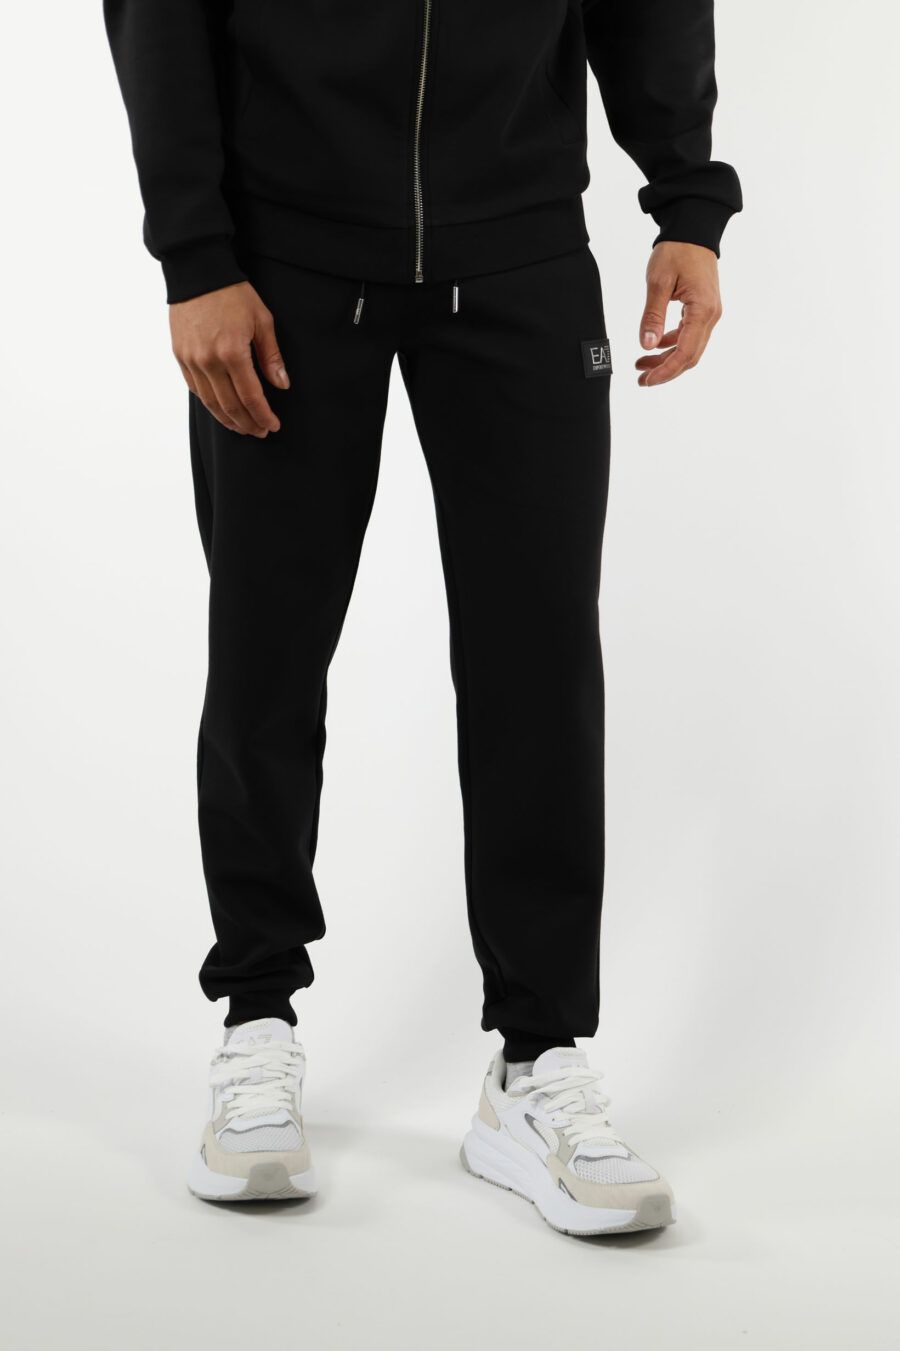 Pantalón de chándal negro con minilogo "lux identity" blanco en placa negra - 110942